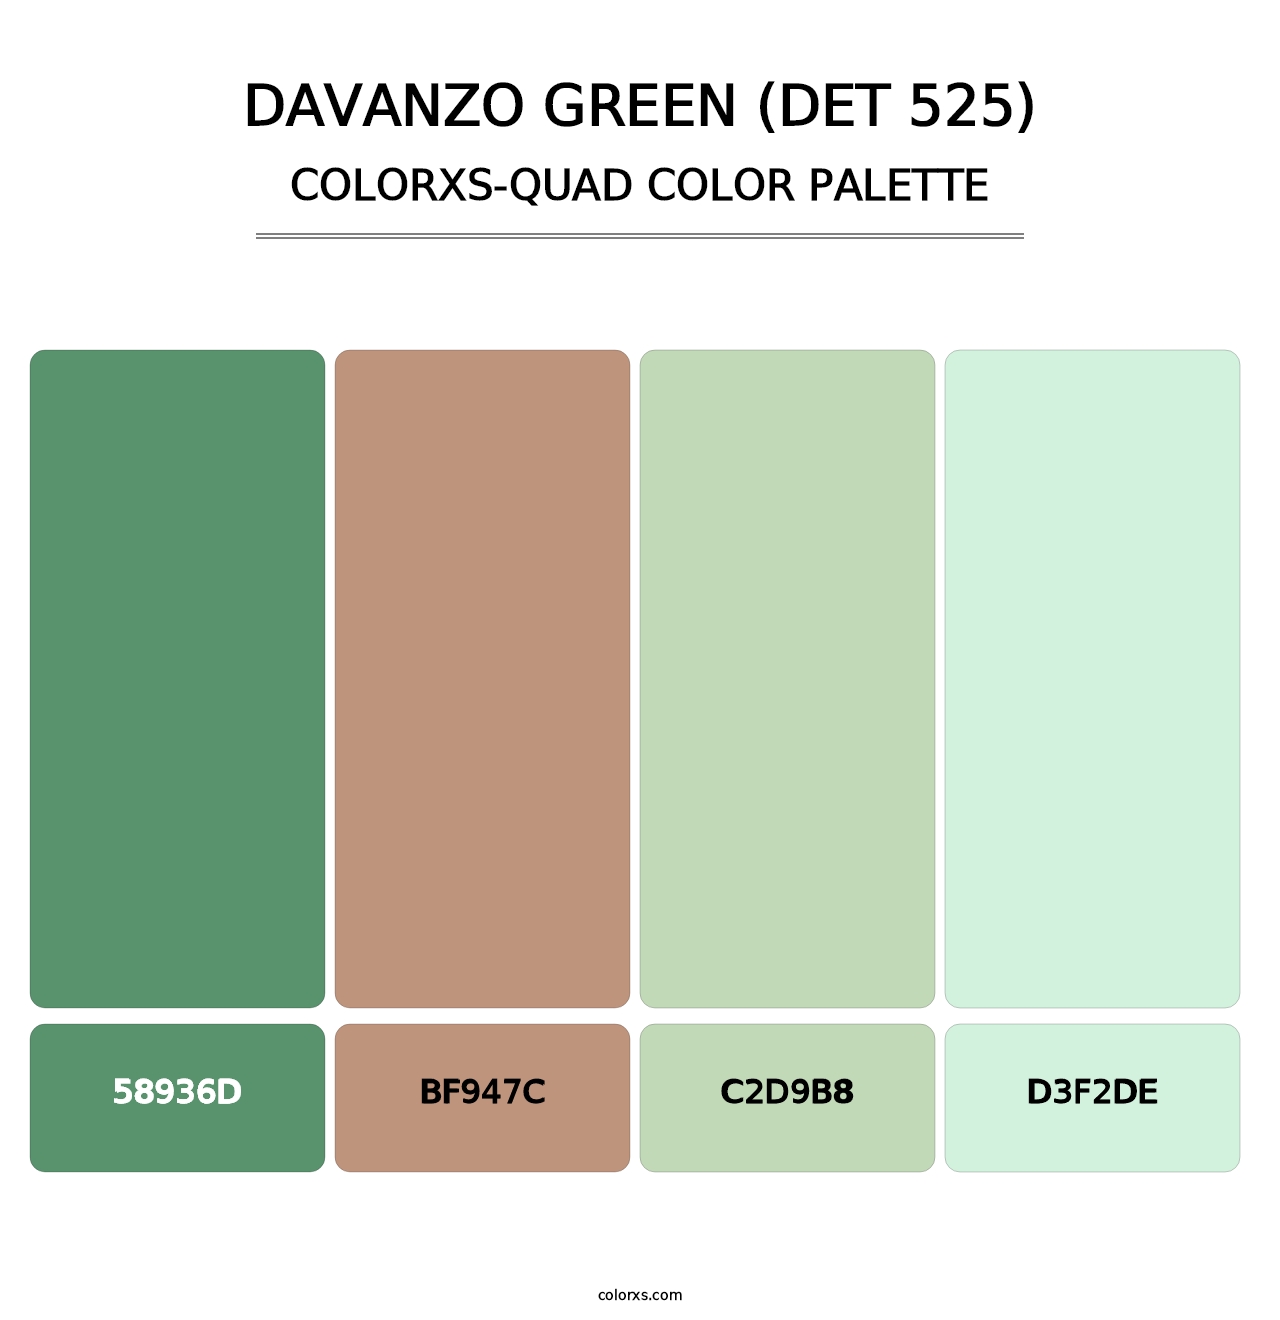 DaVanzo Green (DET 525) - Colorxs Quad Palette